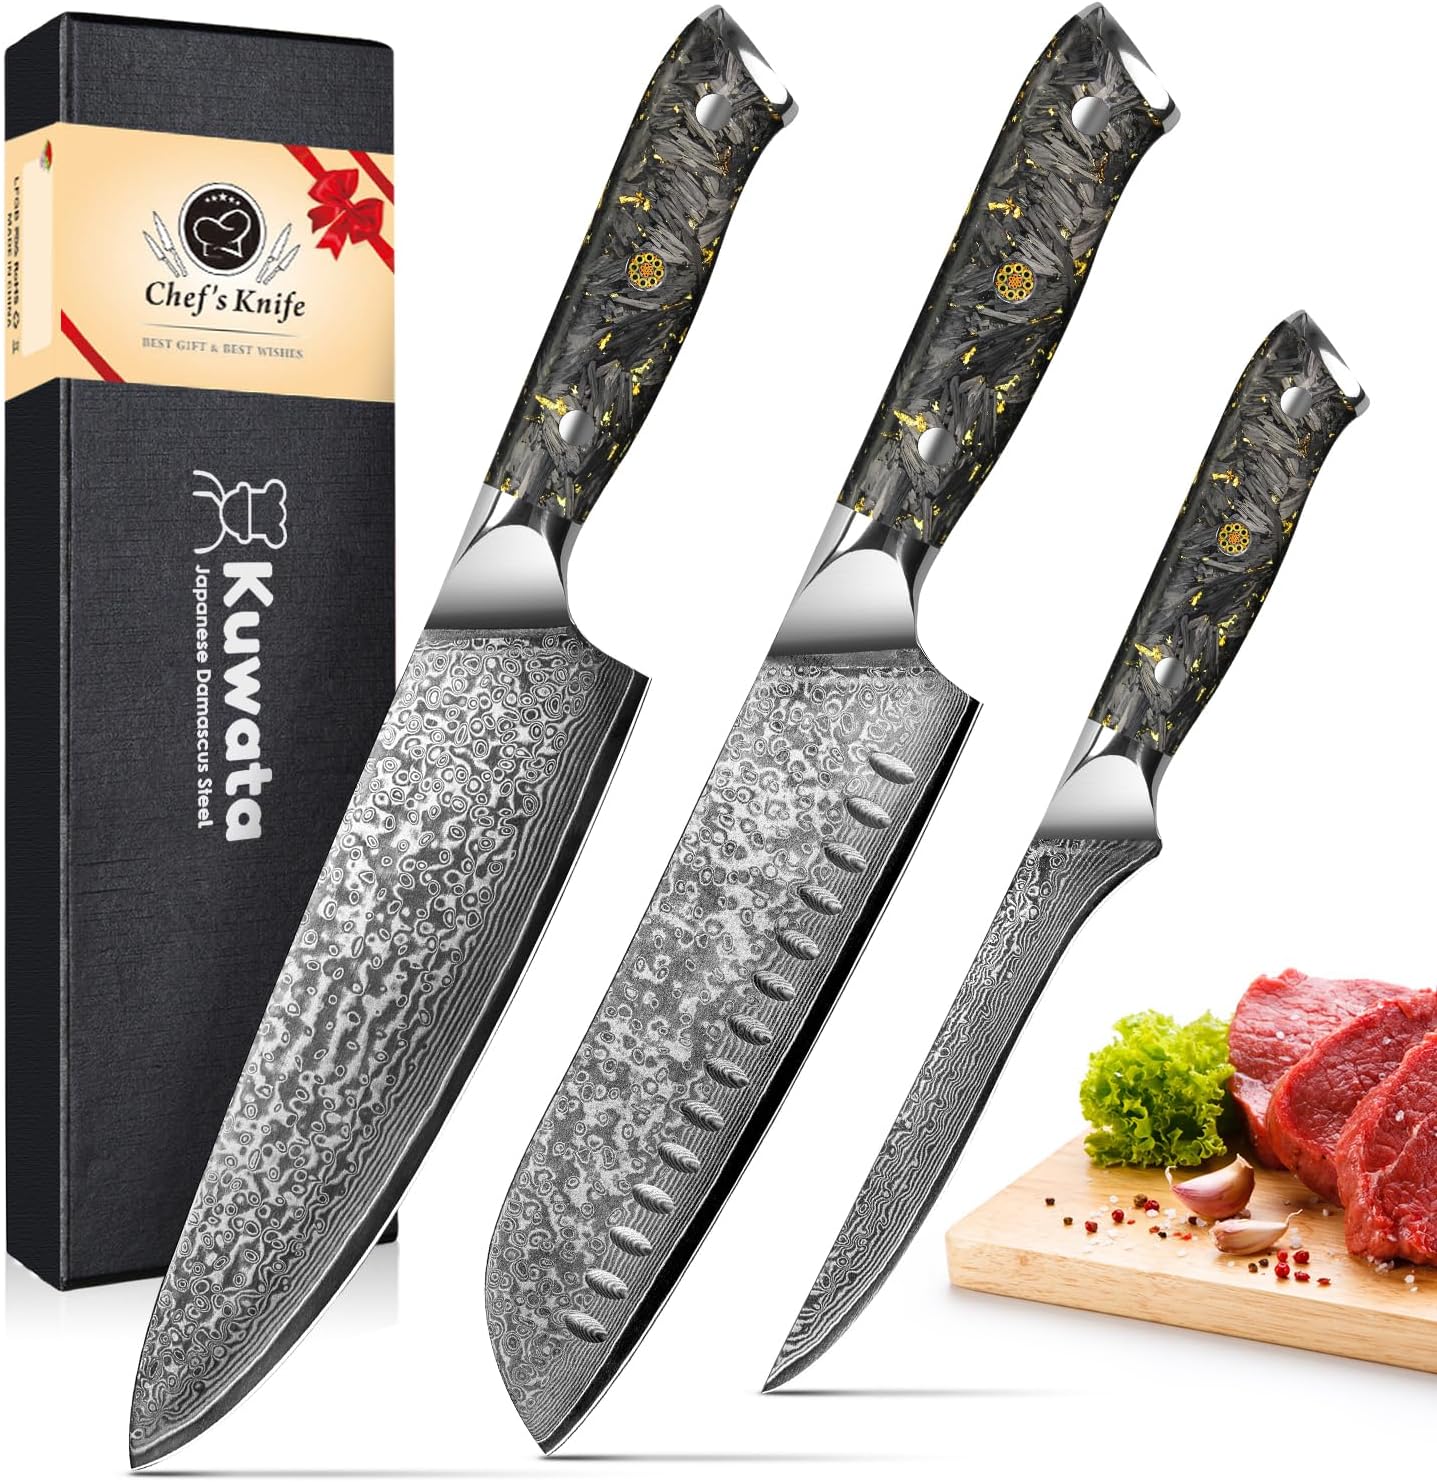 Kitchen Knives Set, Professional Damascus Black Gold Series Chef Knife Set, 3PCS Japanese VG-10 High Carbon Stainless Steel Knife with G10 Ergonomic Handle, Elegant Gift Box for Home Restaurant